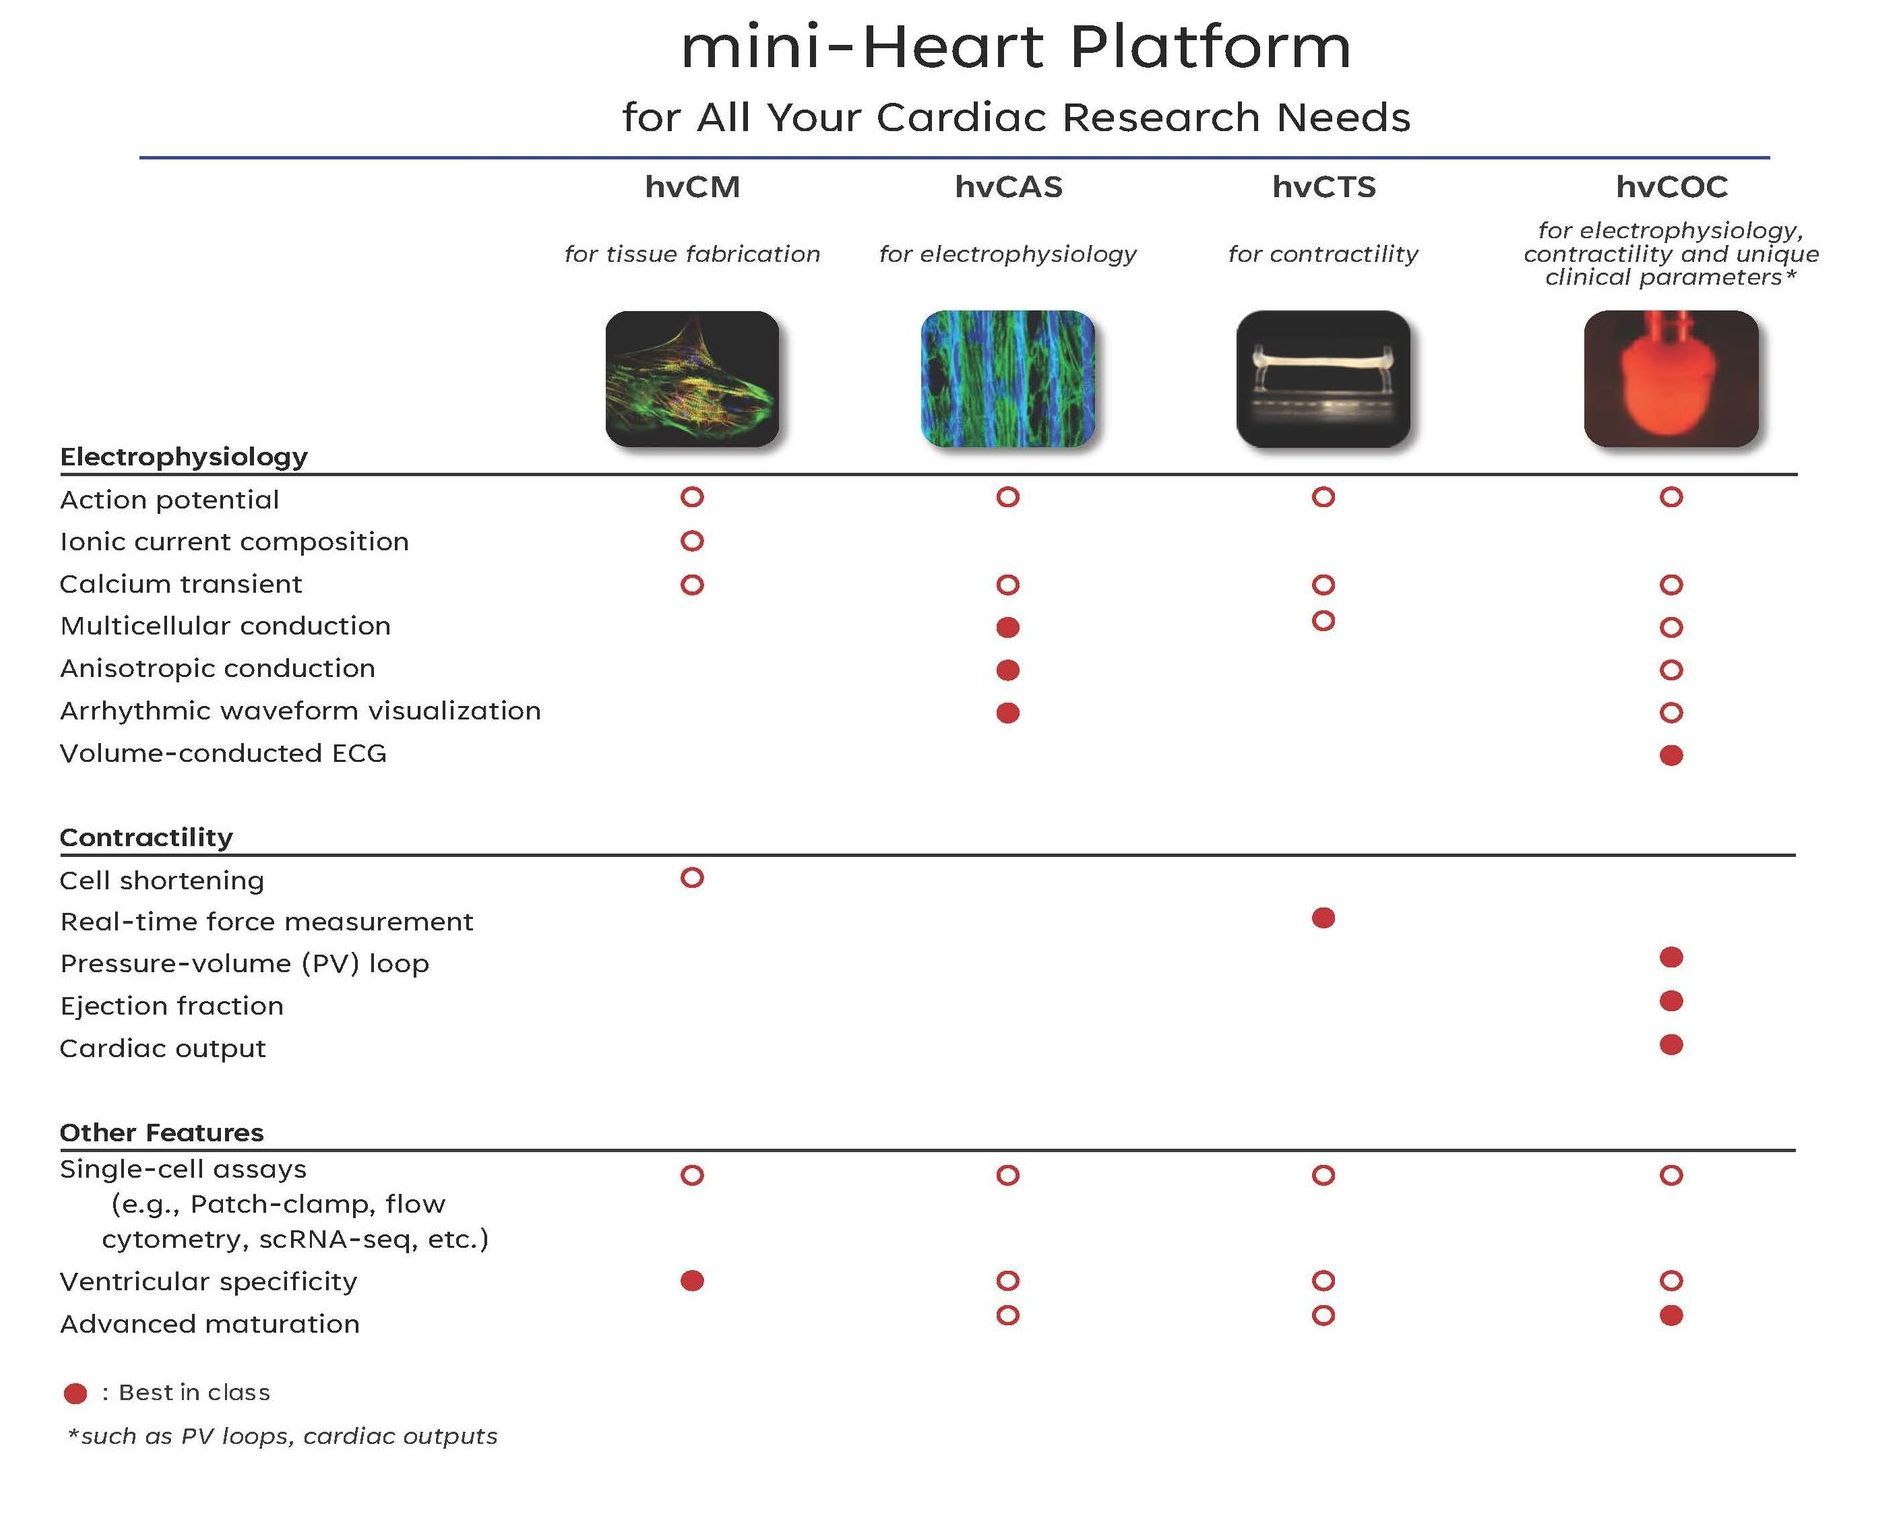 mini-heart Platform